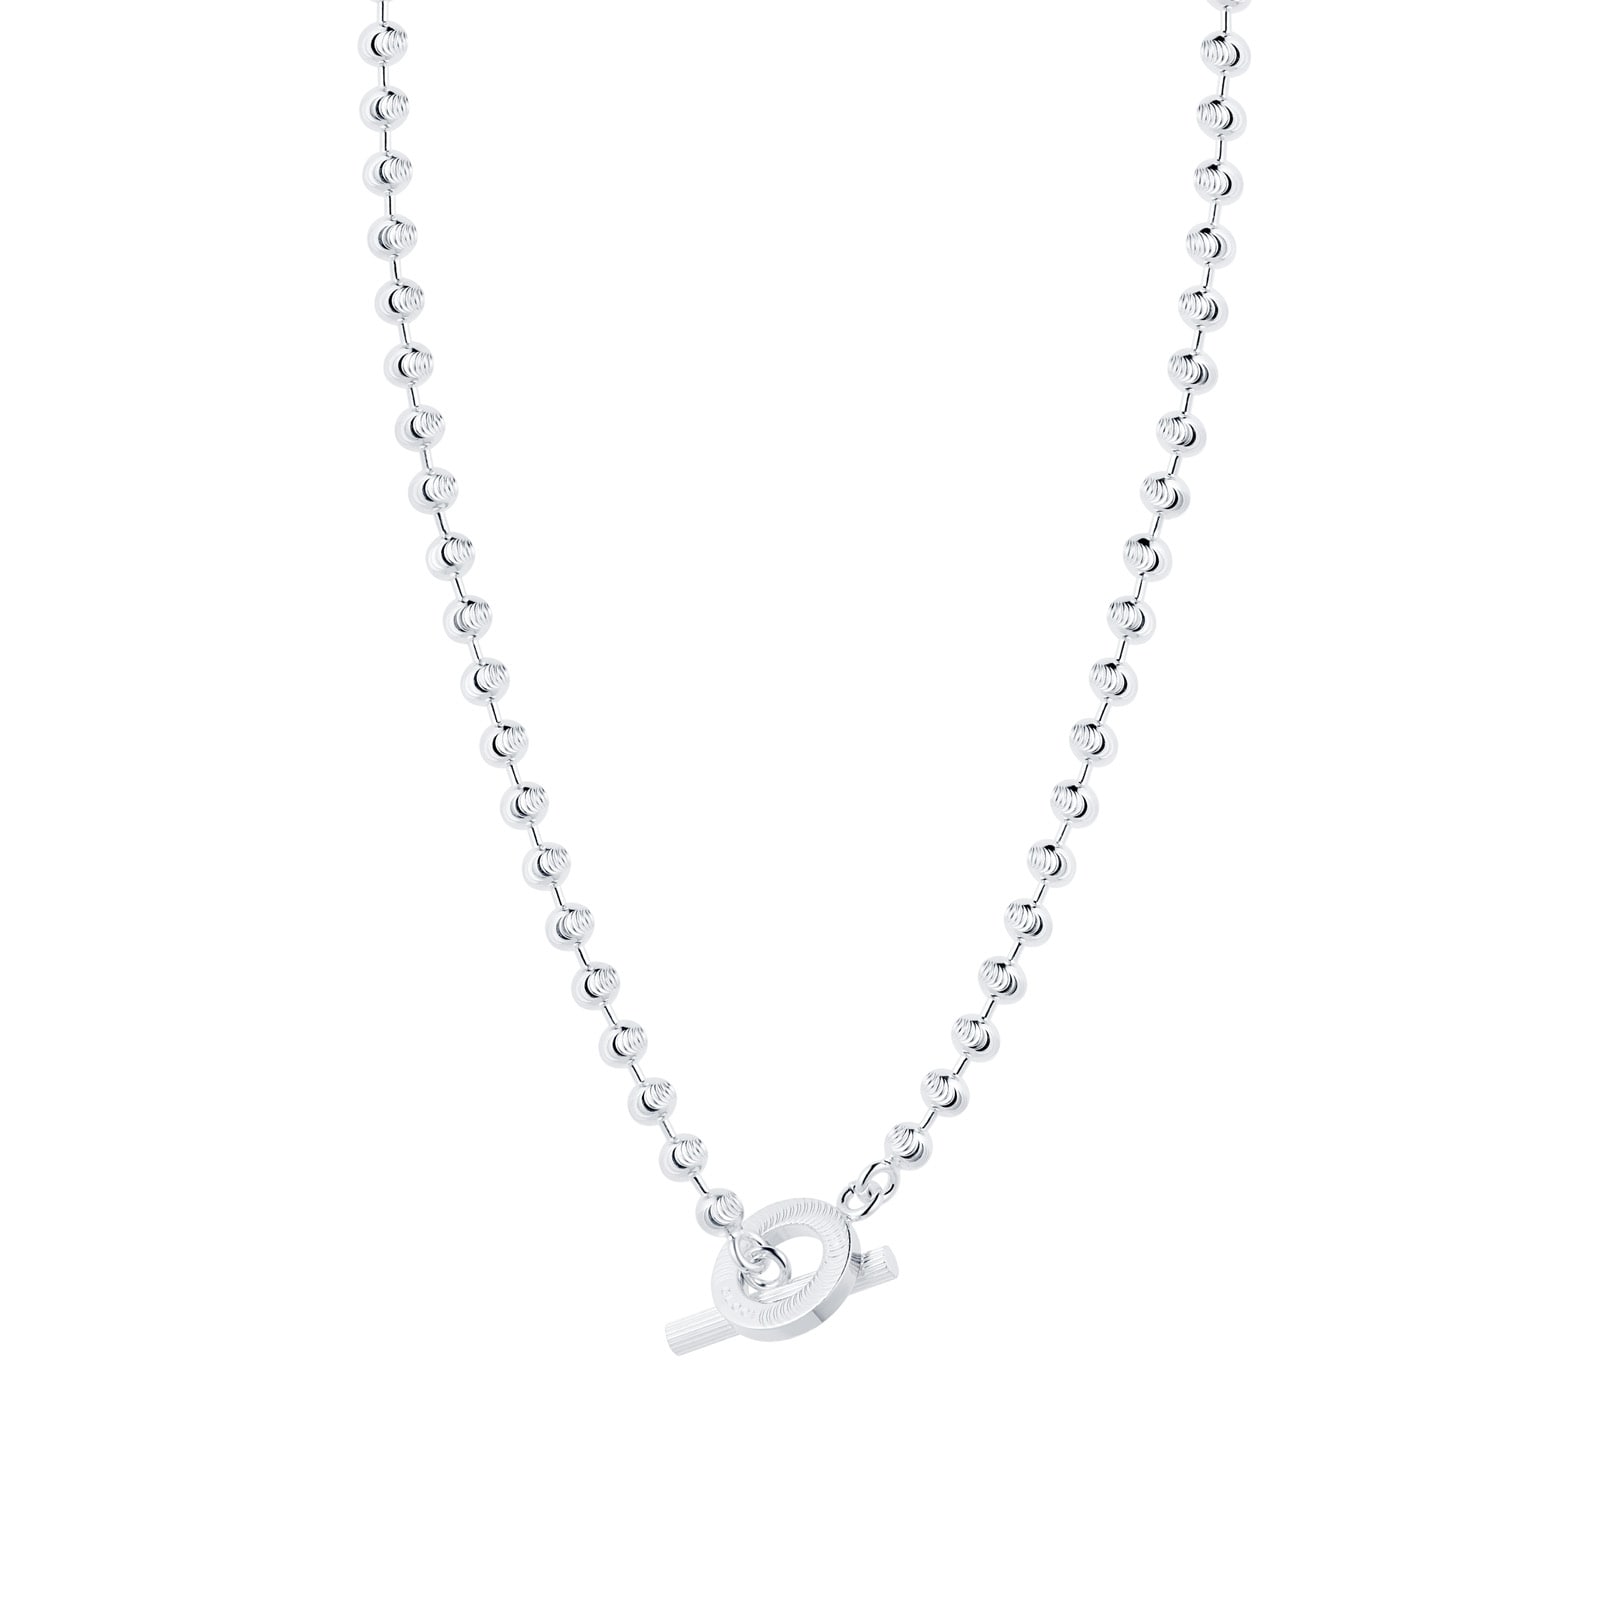 Boule Chain Silver Necklace